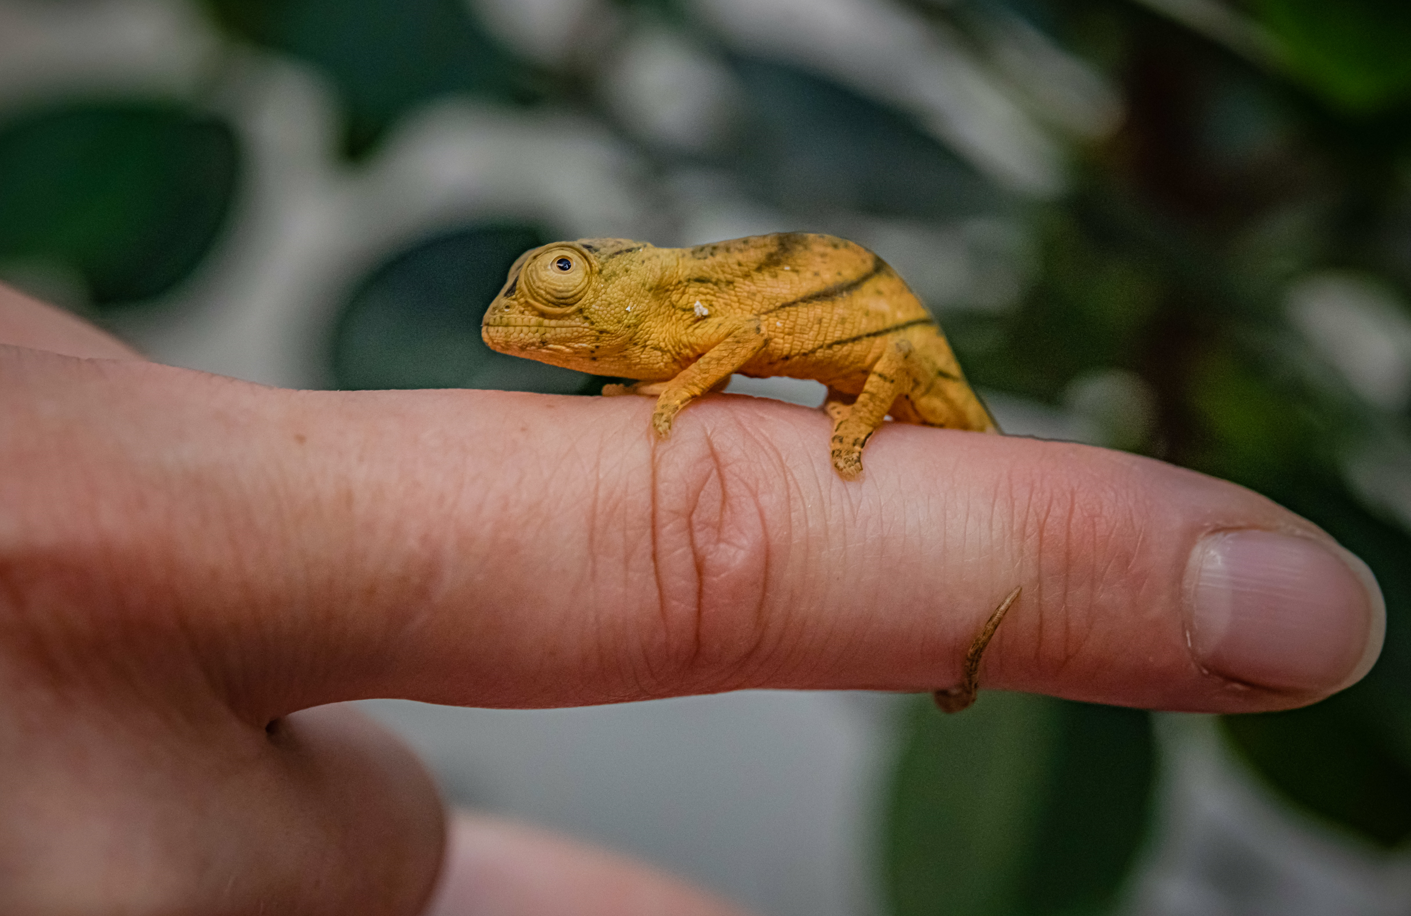 Future Giants: First UK Zoo breeding of Calumma parsonii, the world’s largest chameleon